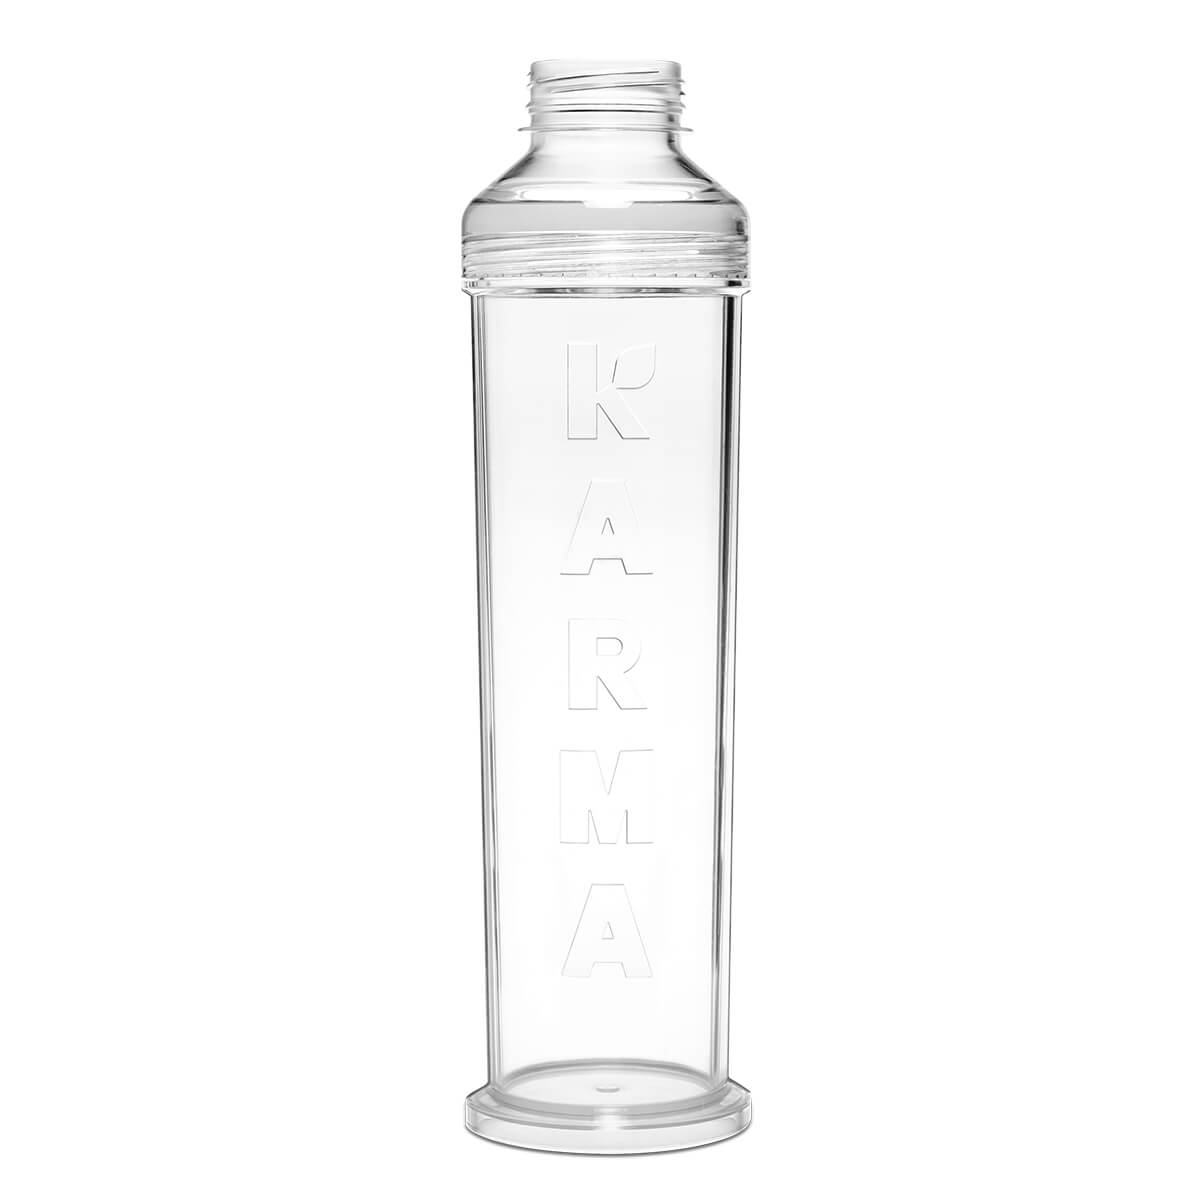 BPA Free Plastic Reusable Water Bottles